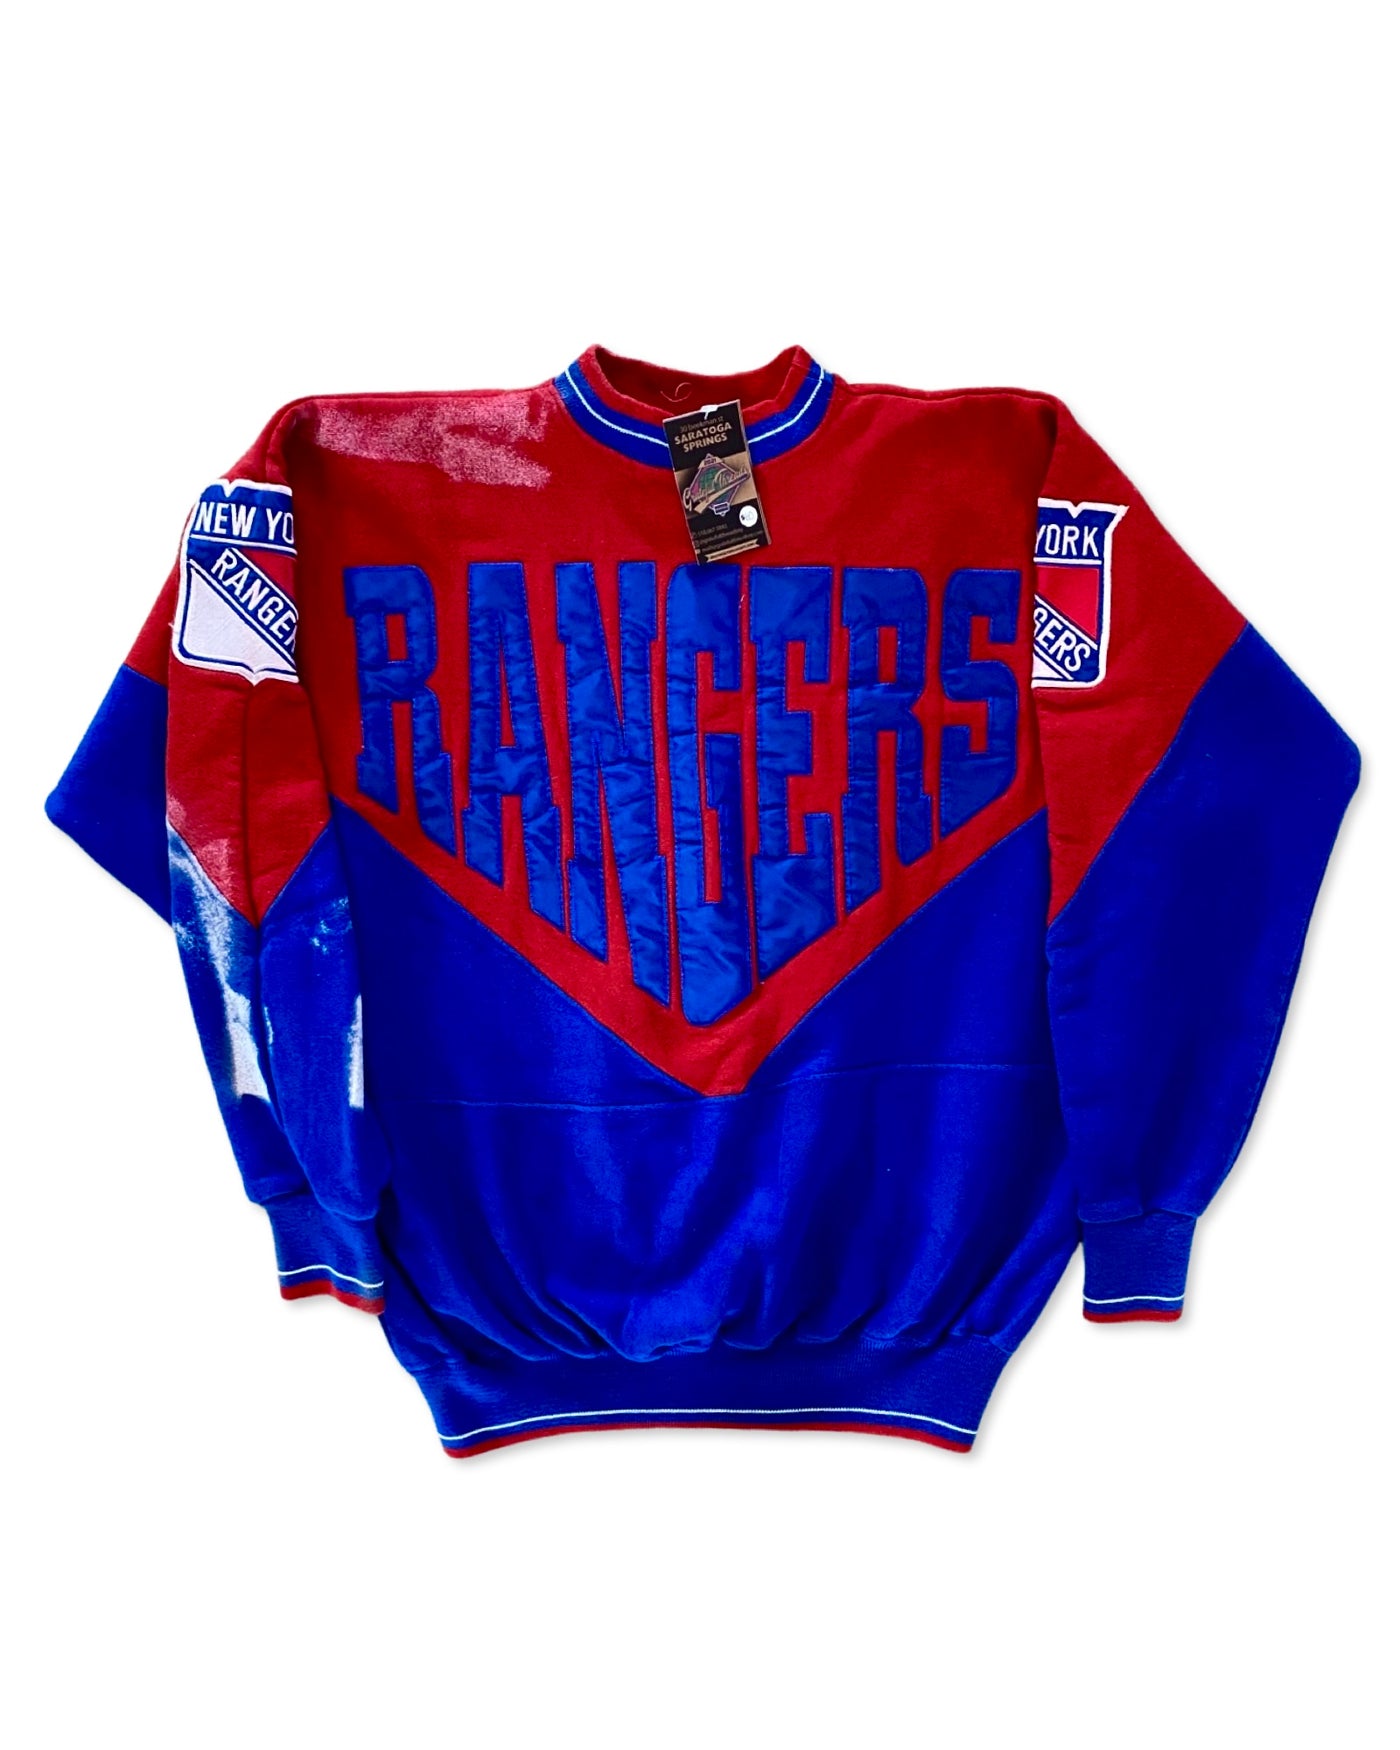 Vintage 90s New York Rangers Spellout Crewneck